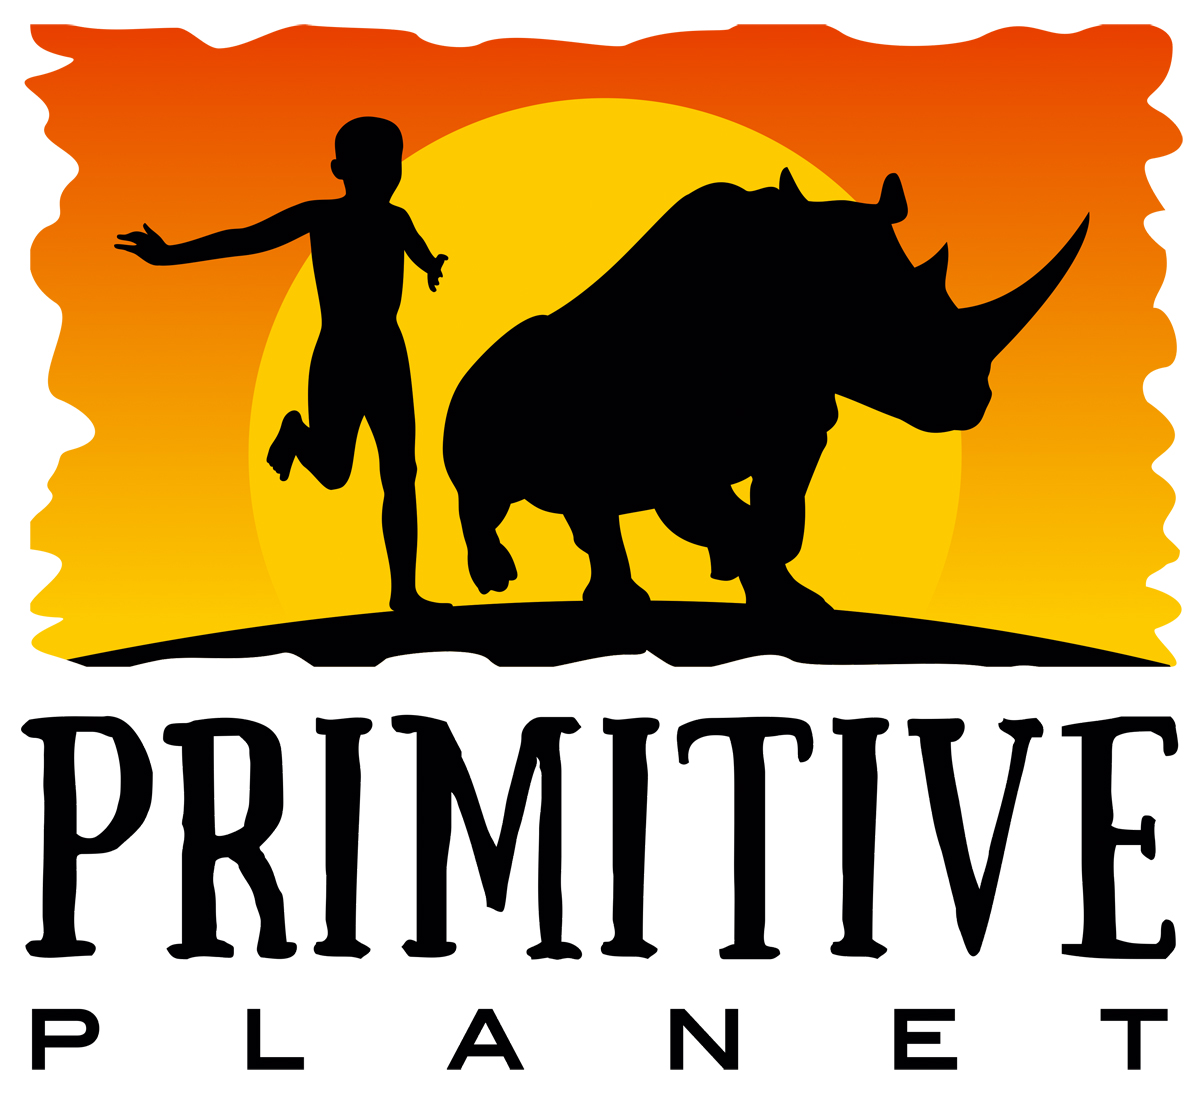 Primitive Planet, LLC logo